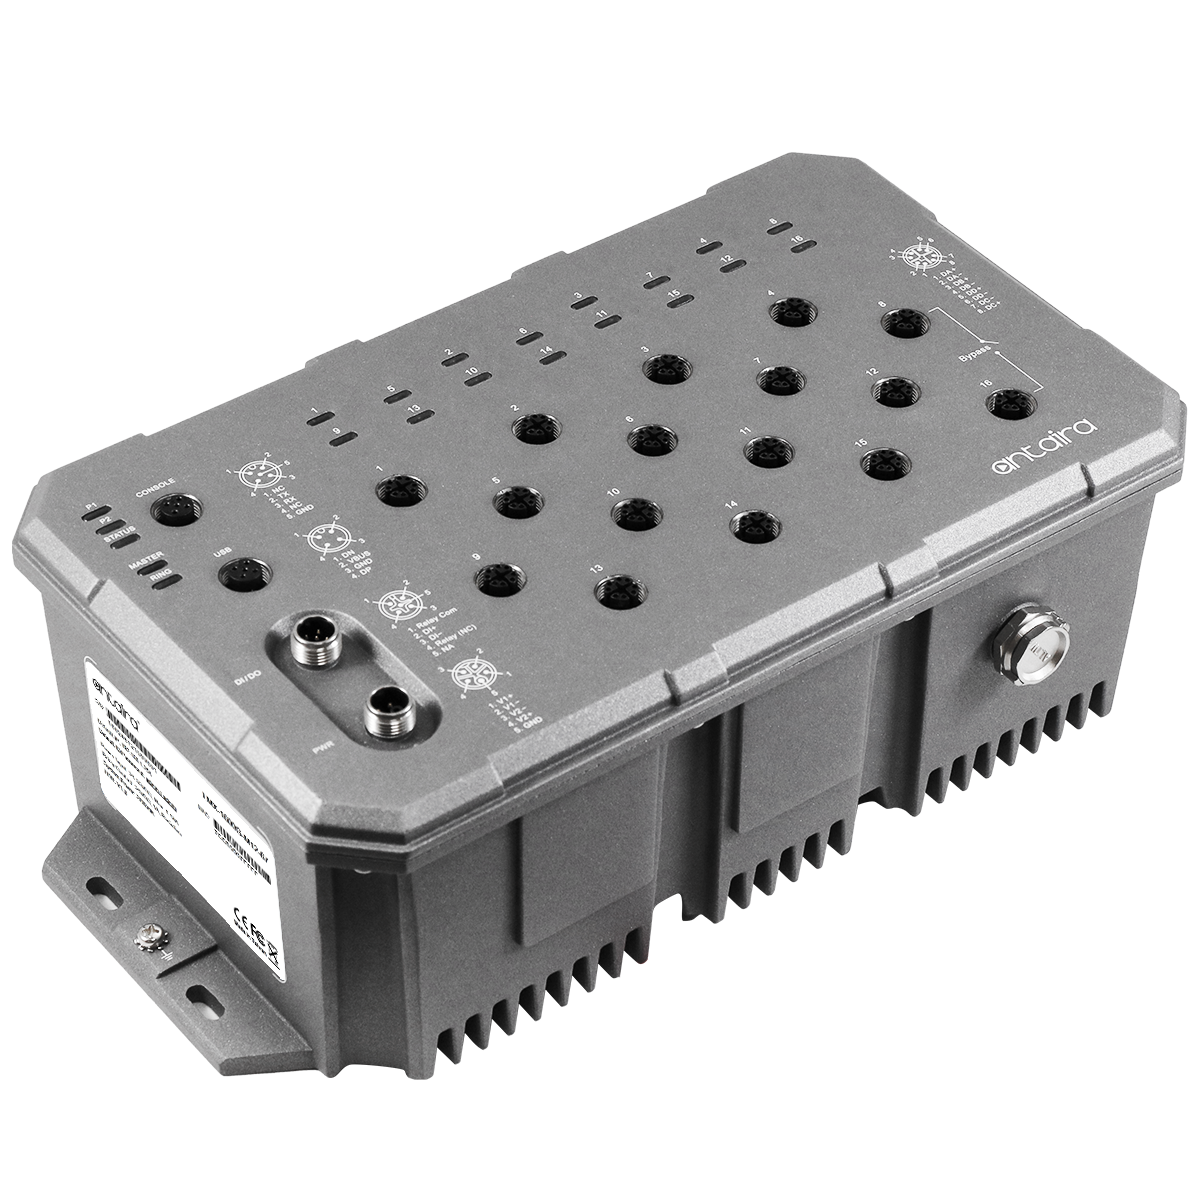 Full gigabit 16-port managed industrial Ethernet switch-Industrial Ethernet  Switch